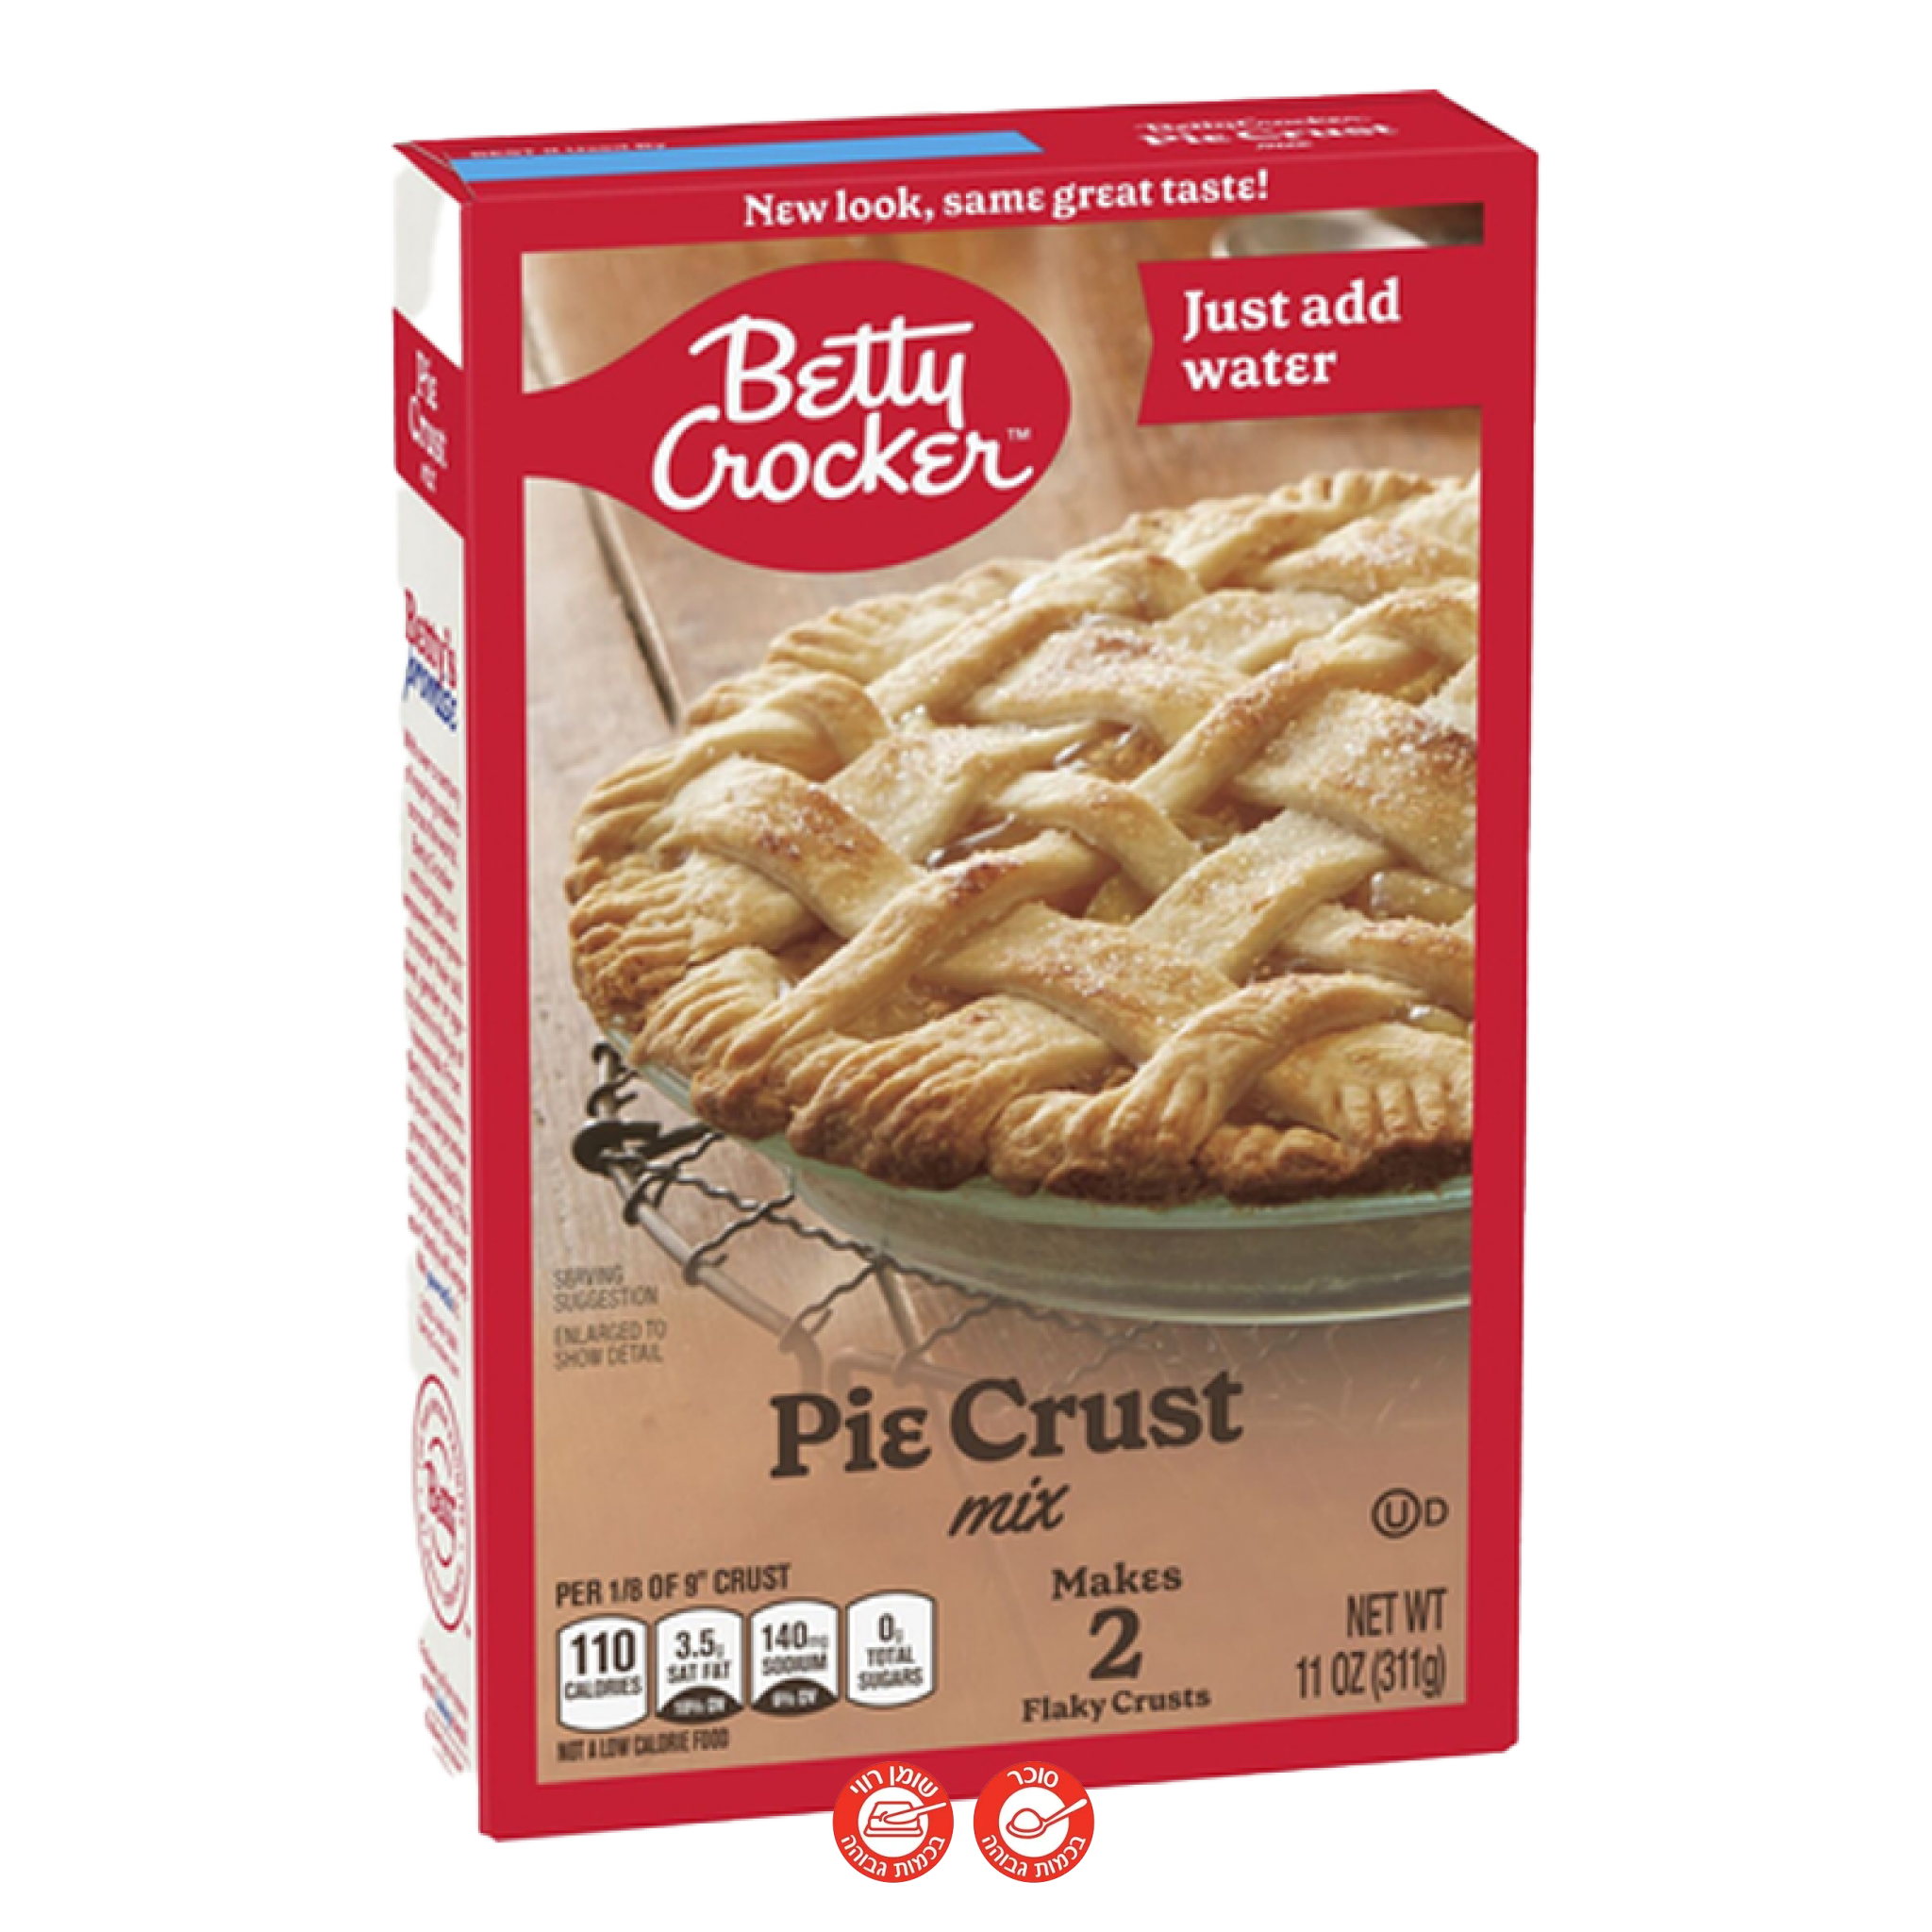 Betty Crocker Pie Crust Mix בטי קרוקר ציפוי לפאי